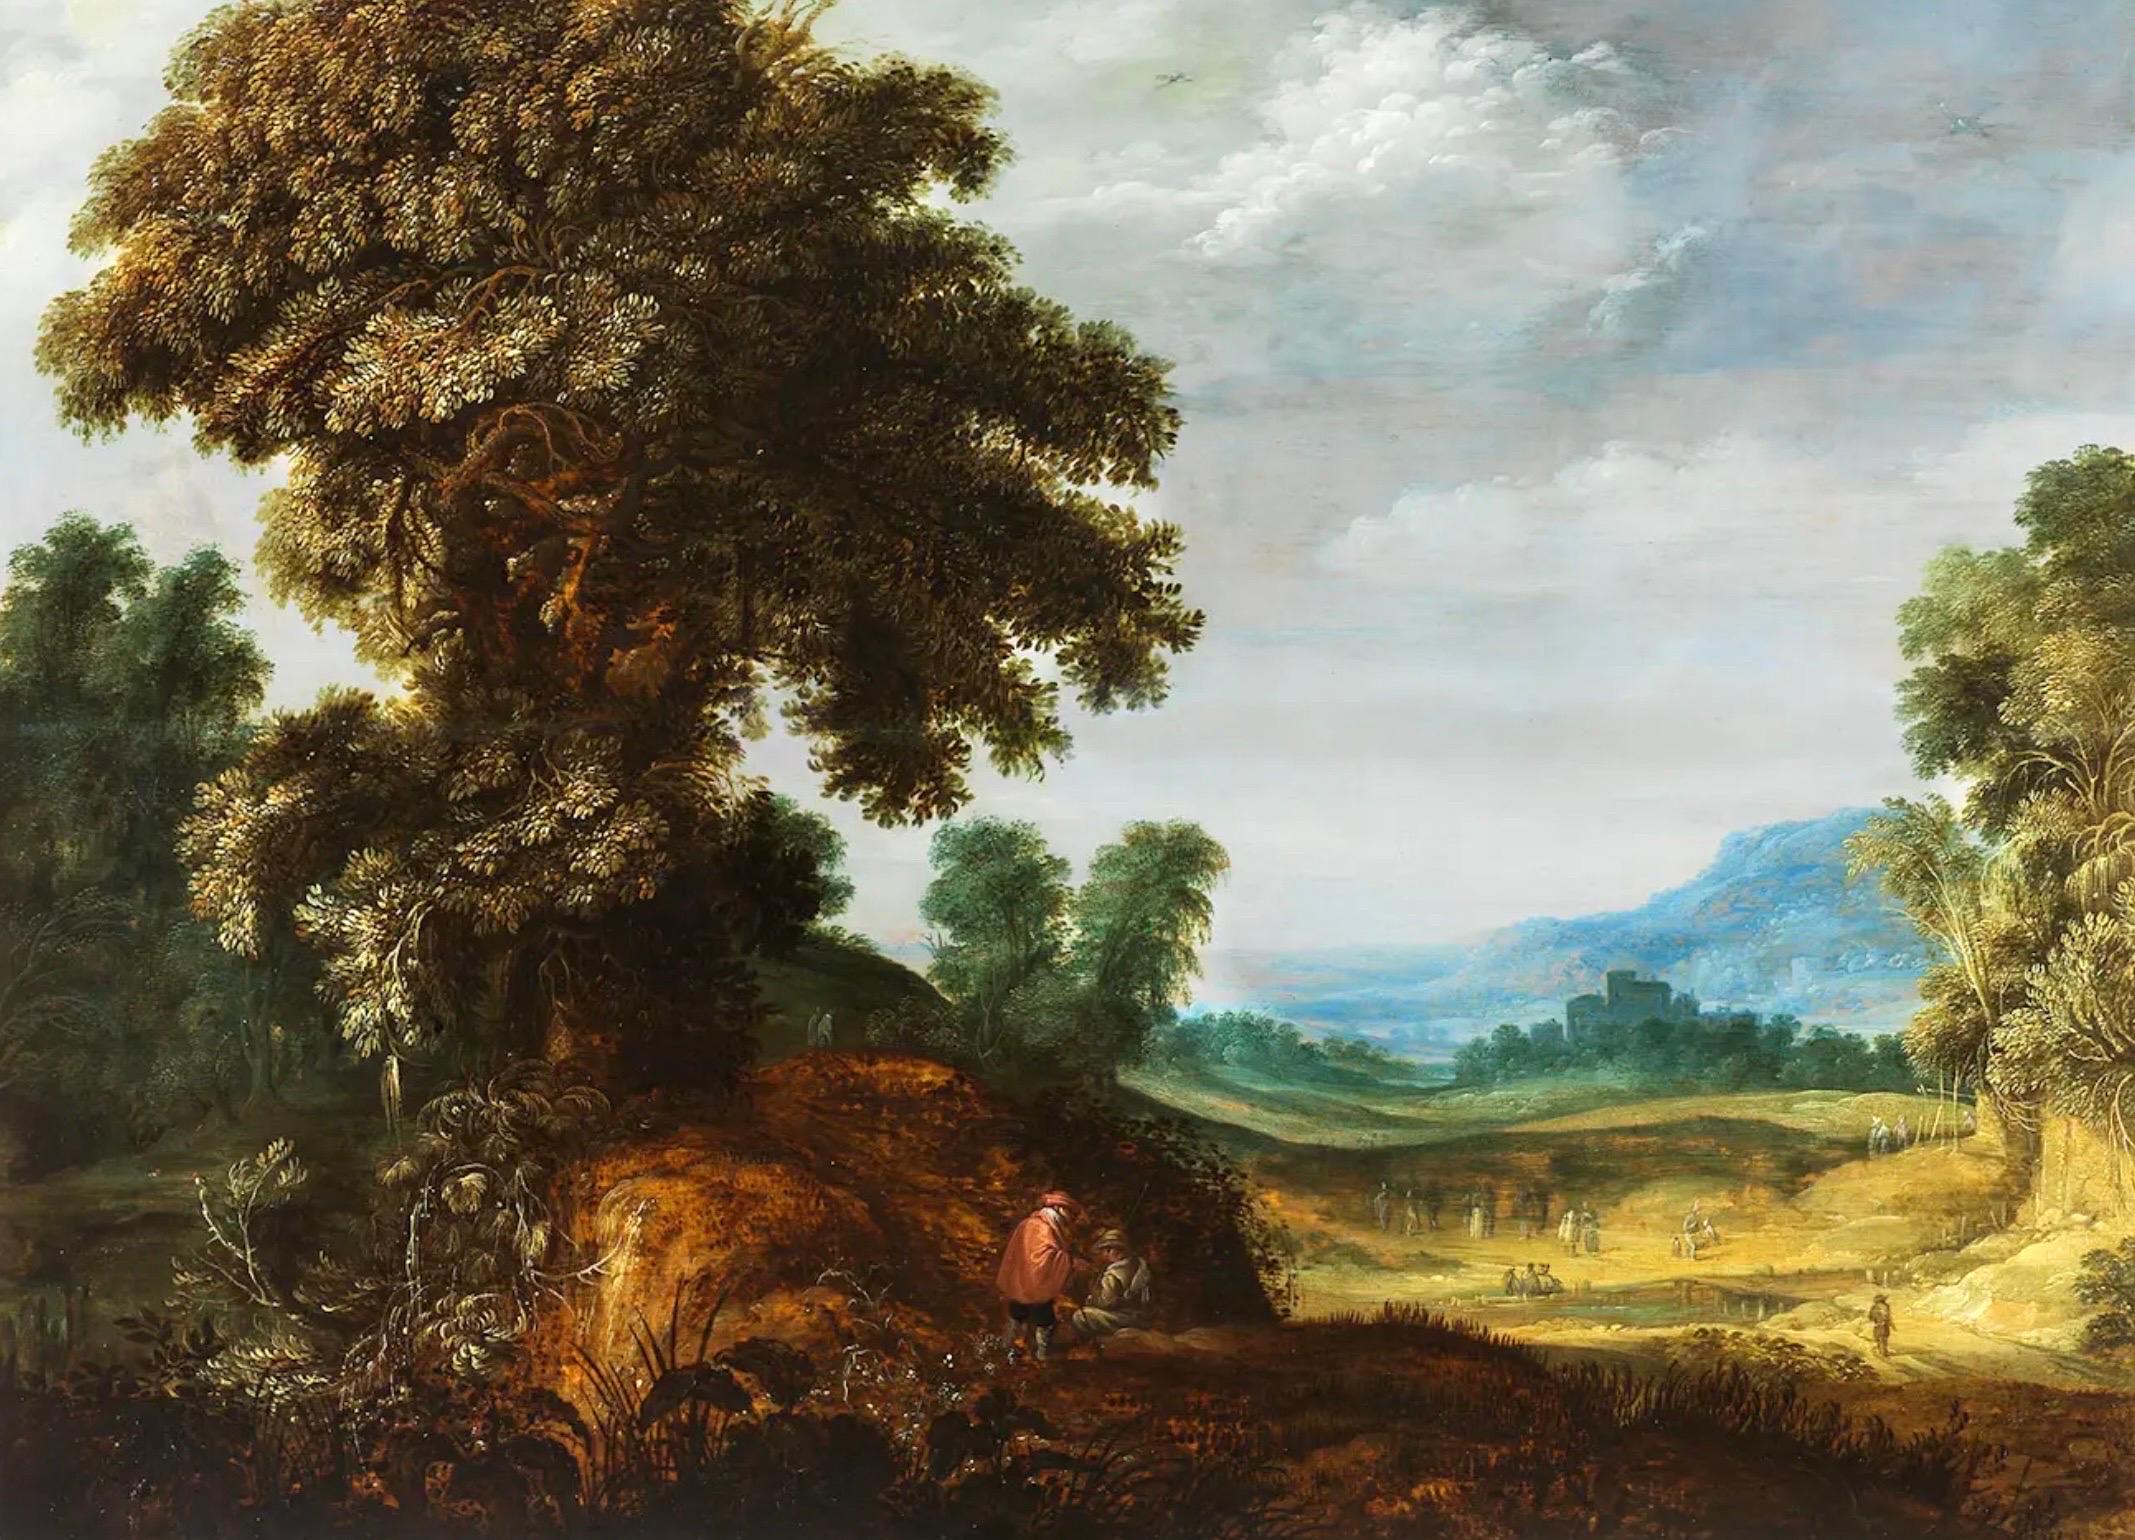 Alexander Keirincx Figurative Painting - 17th century Flemish Old Master painting - Vast landscape with a majestic oak